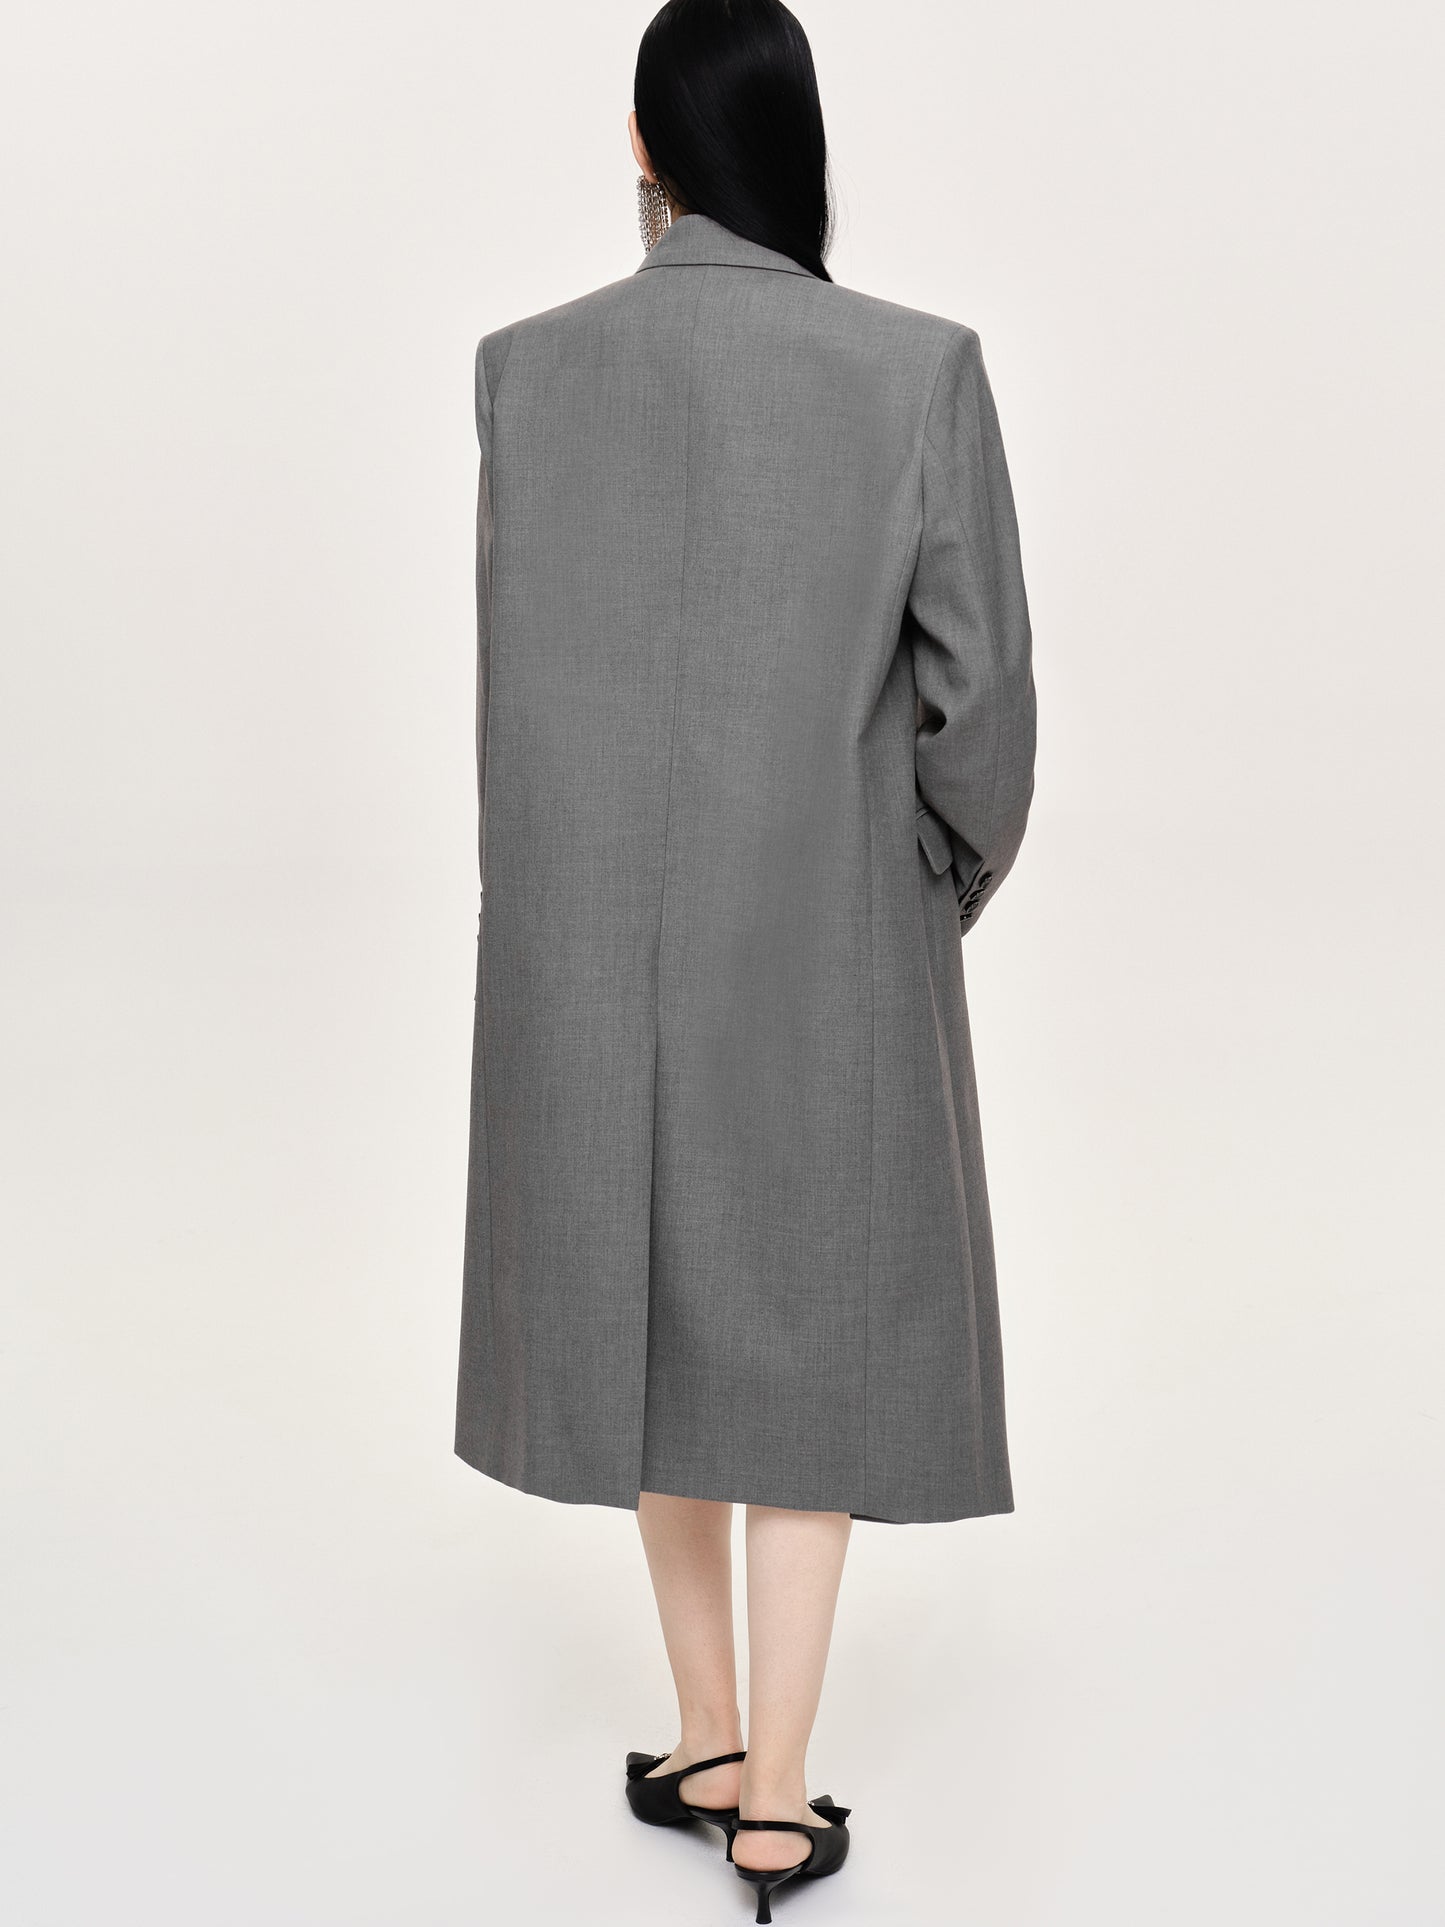 3-Button Overcoat, Grey